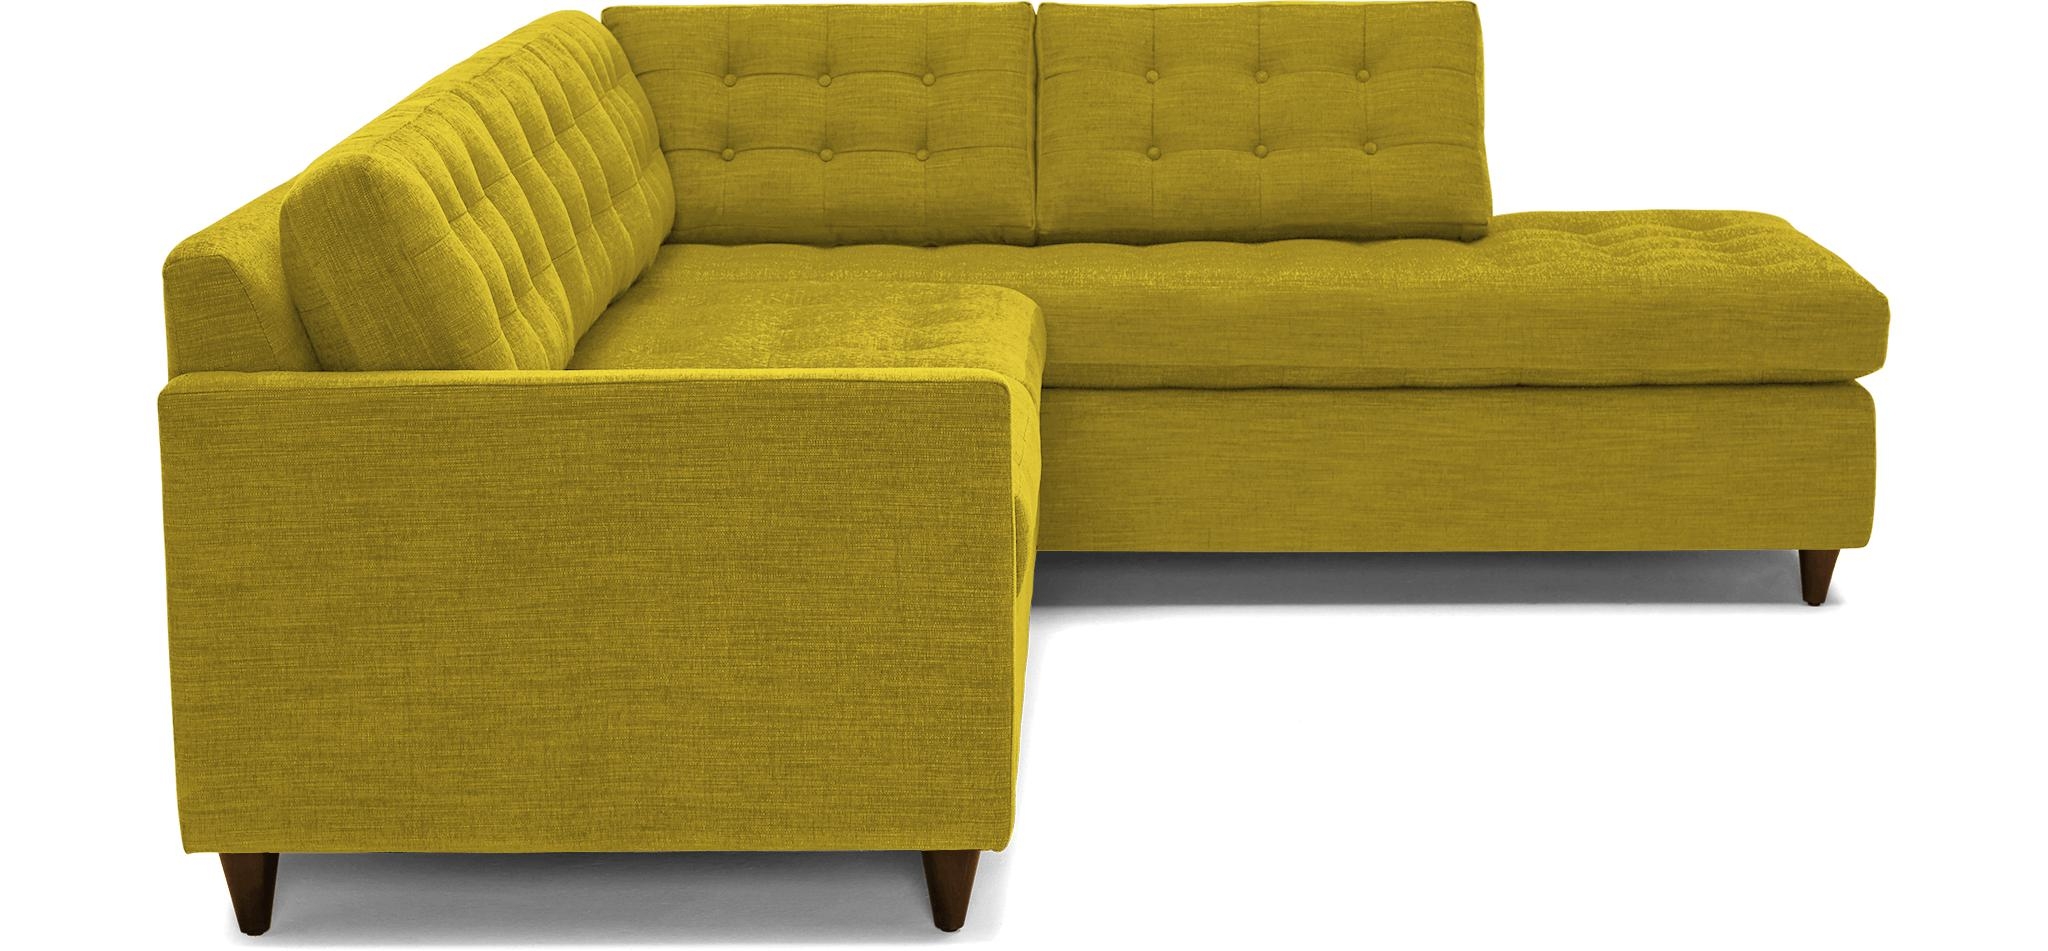 Yellow Eliot Mid Century Modern Bumper Sleeper Sectional - Bloke Goldenrod - Mocha - Left - Image 2